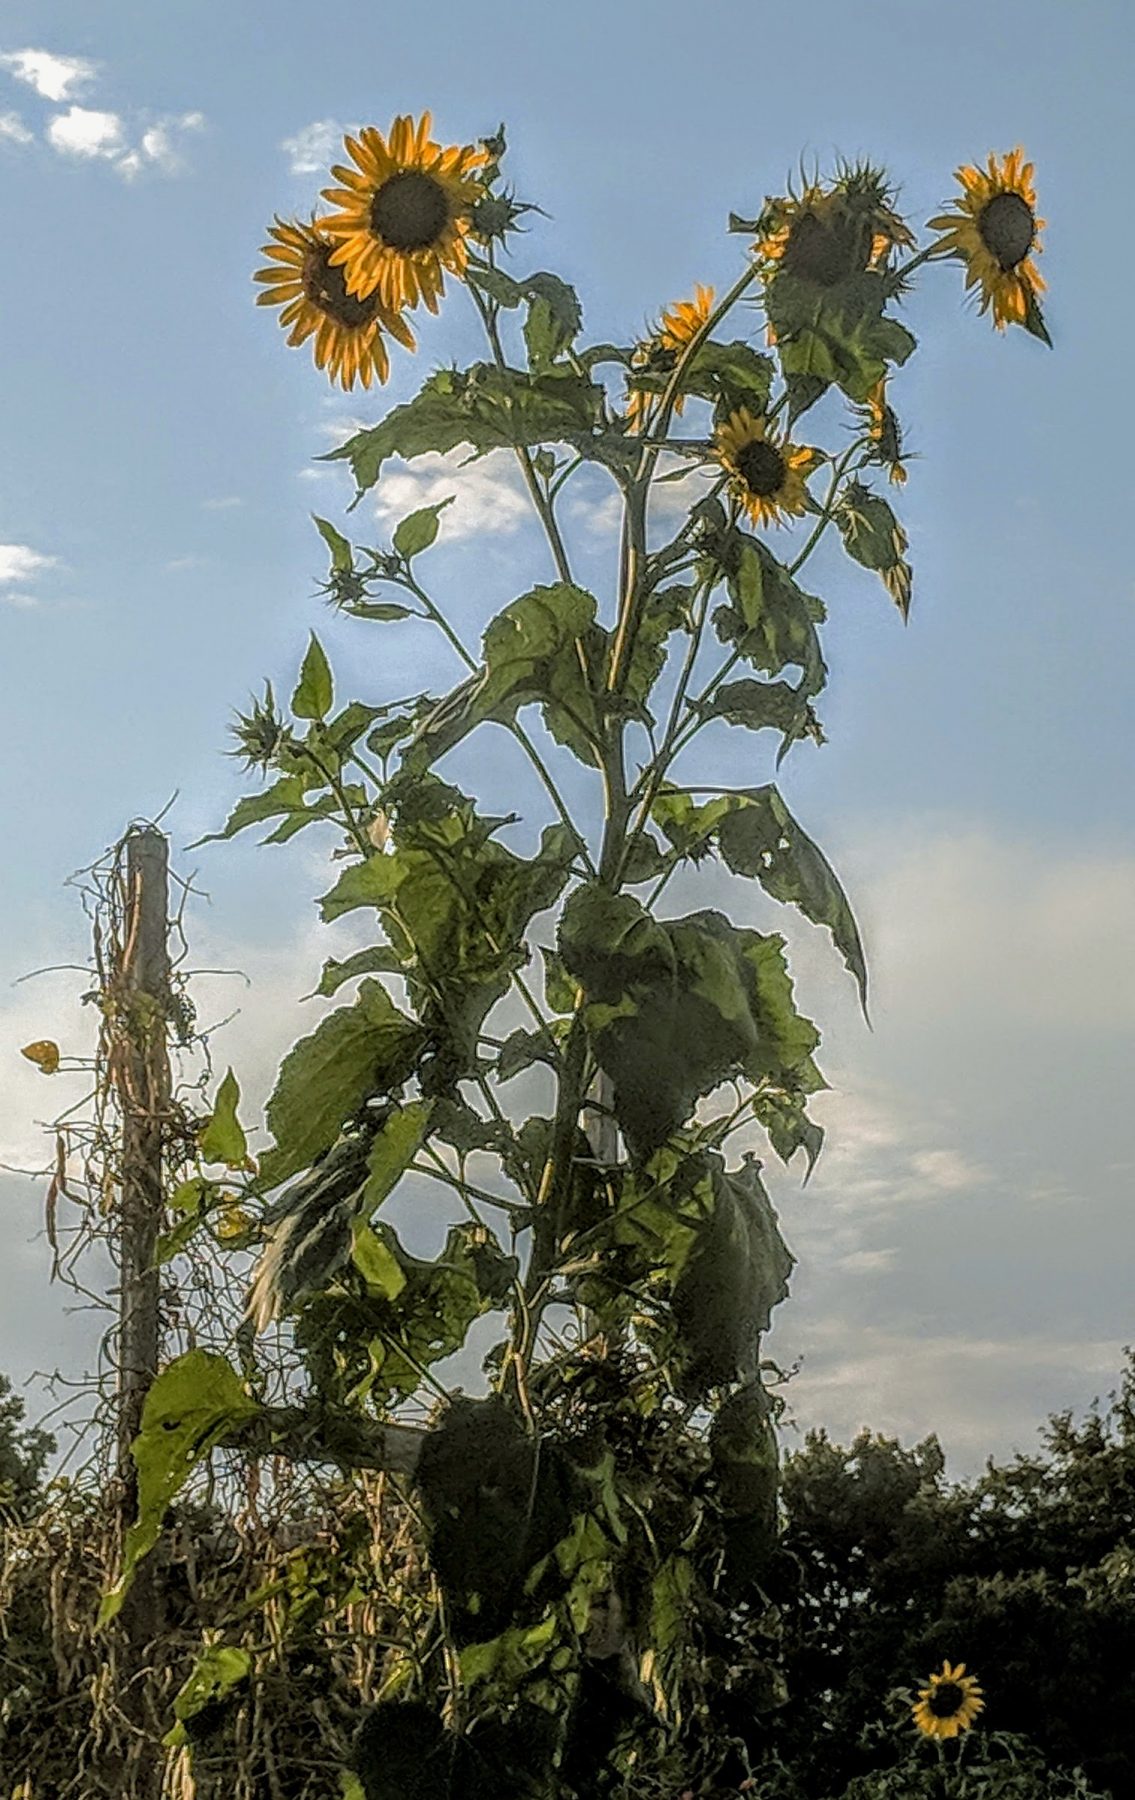 tall sunflowers in a garden against blue sky